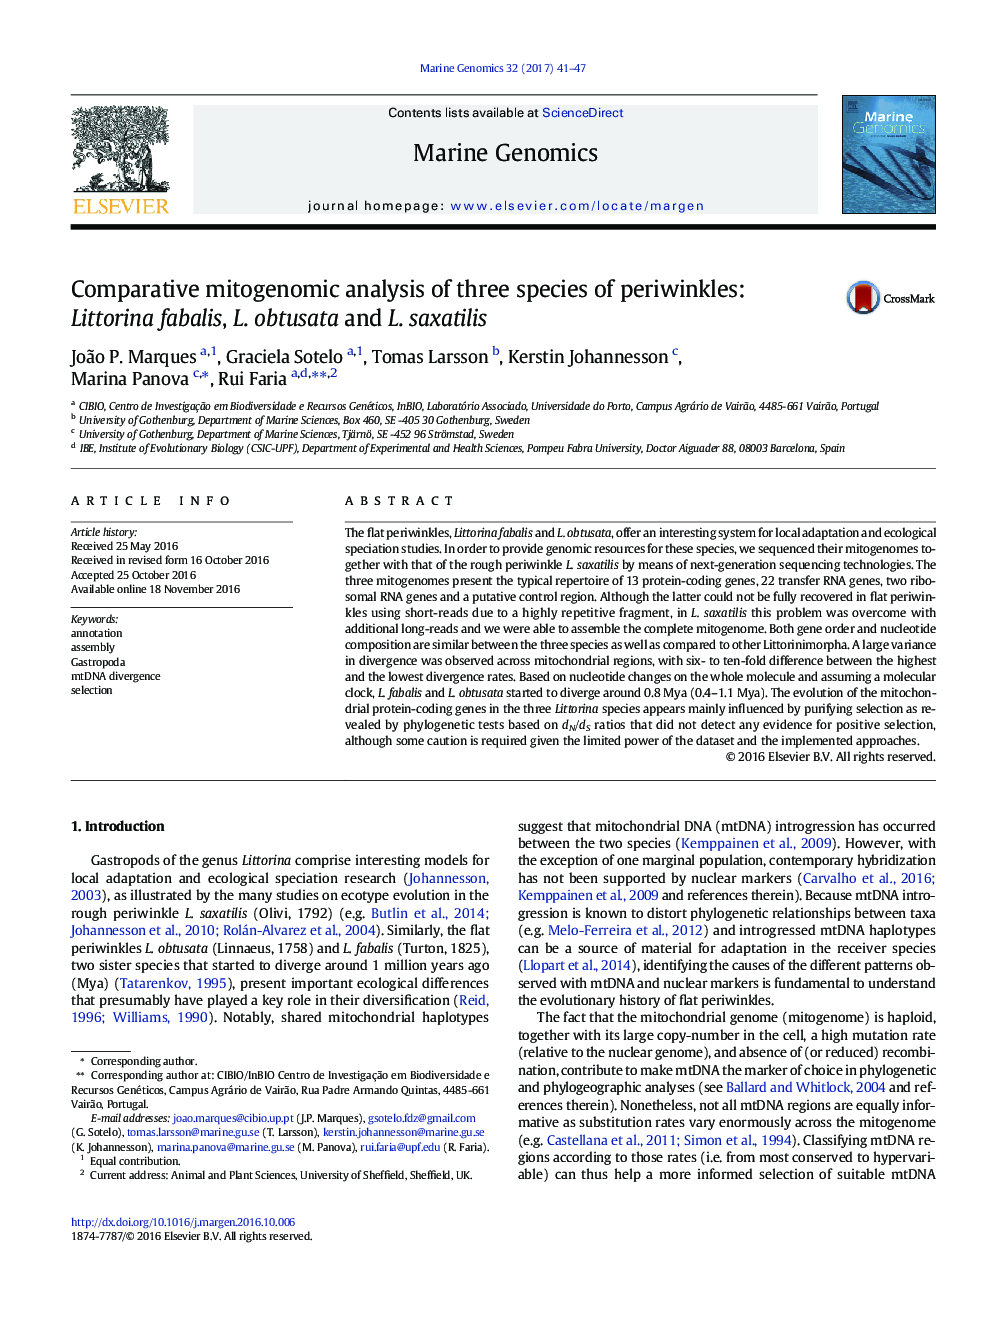 Comparative mitogenomic analysis of three species of periwinkles: Littorina fabalis, L. obtusata and L. saxatilis